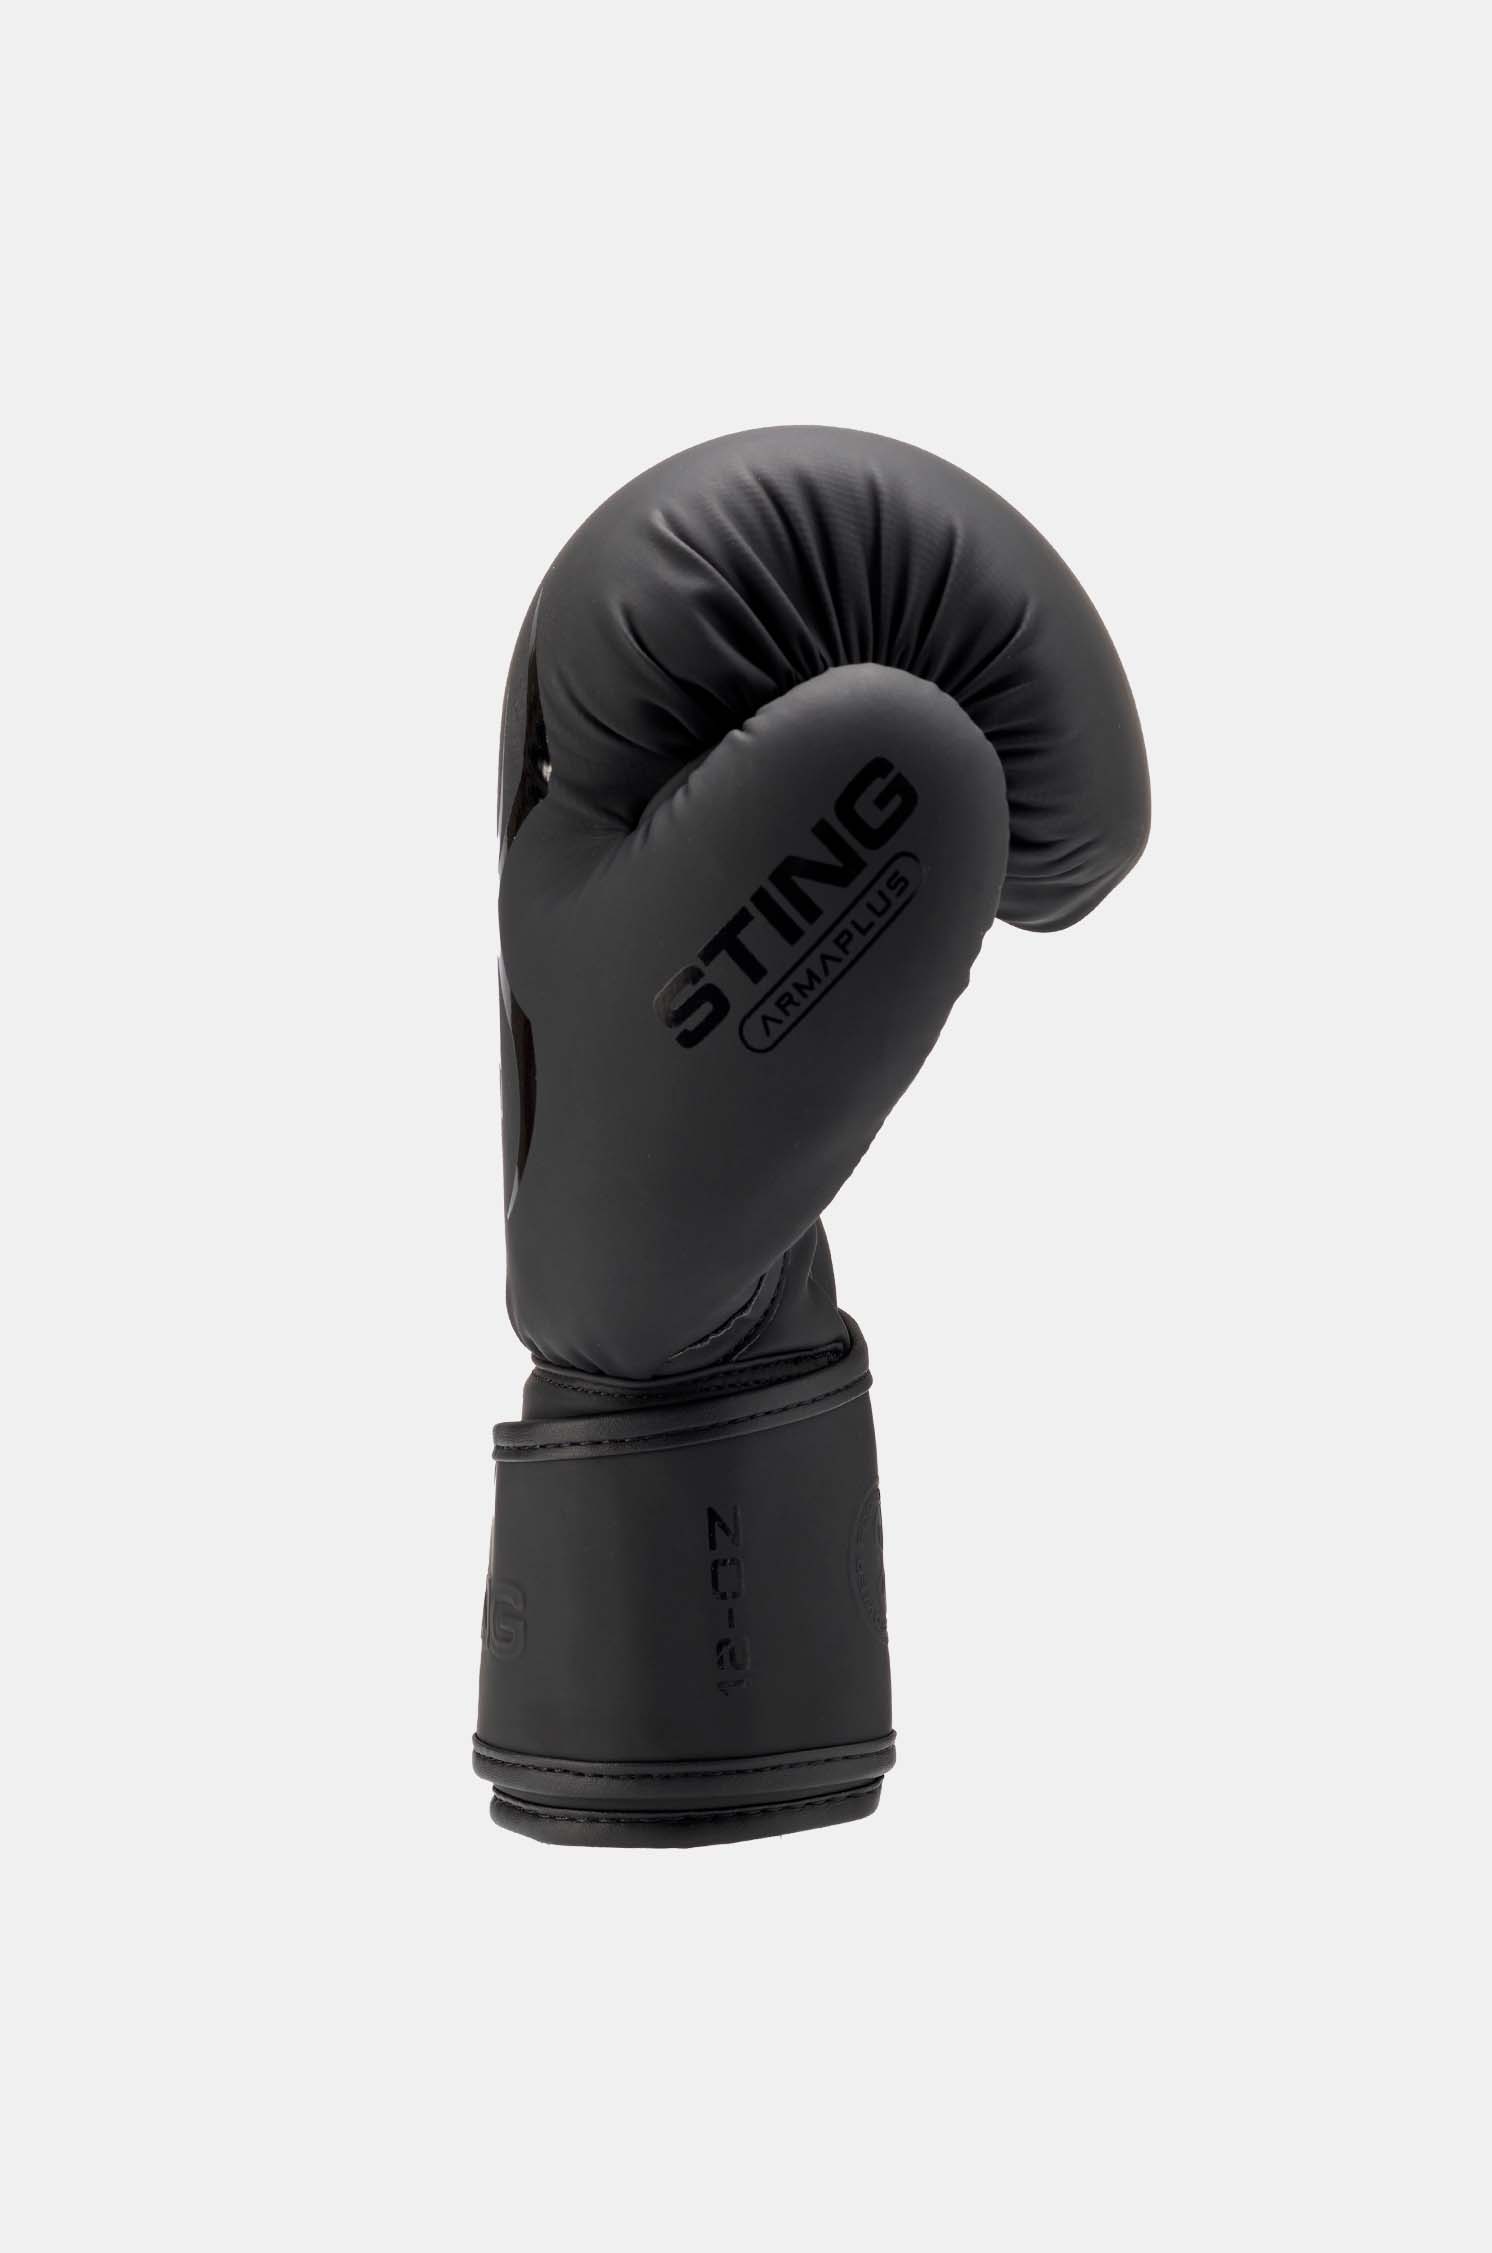 Armaplus Boxing Glove